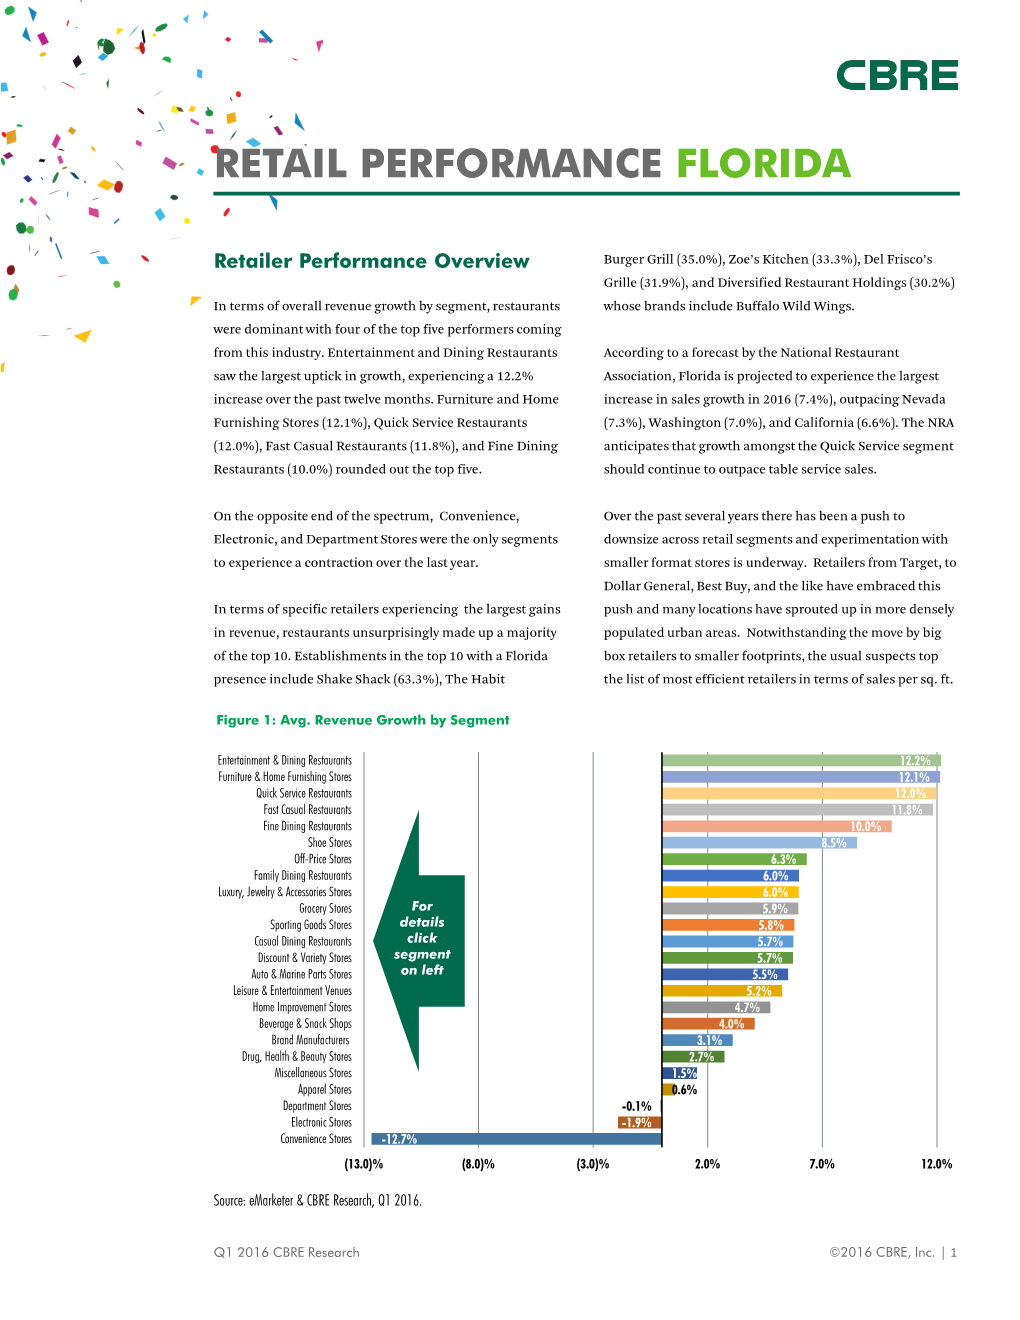 Retail Performance Florida